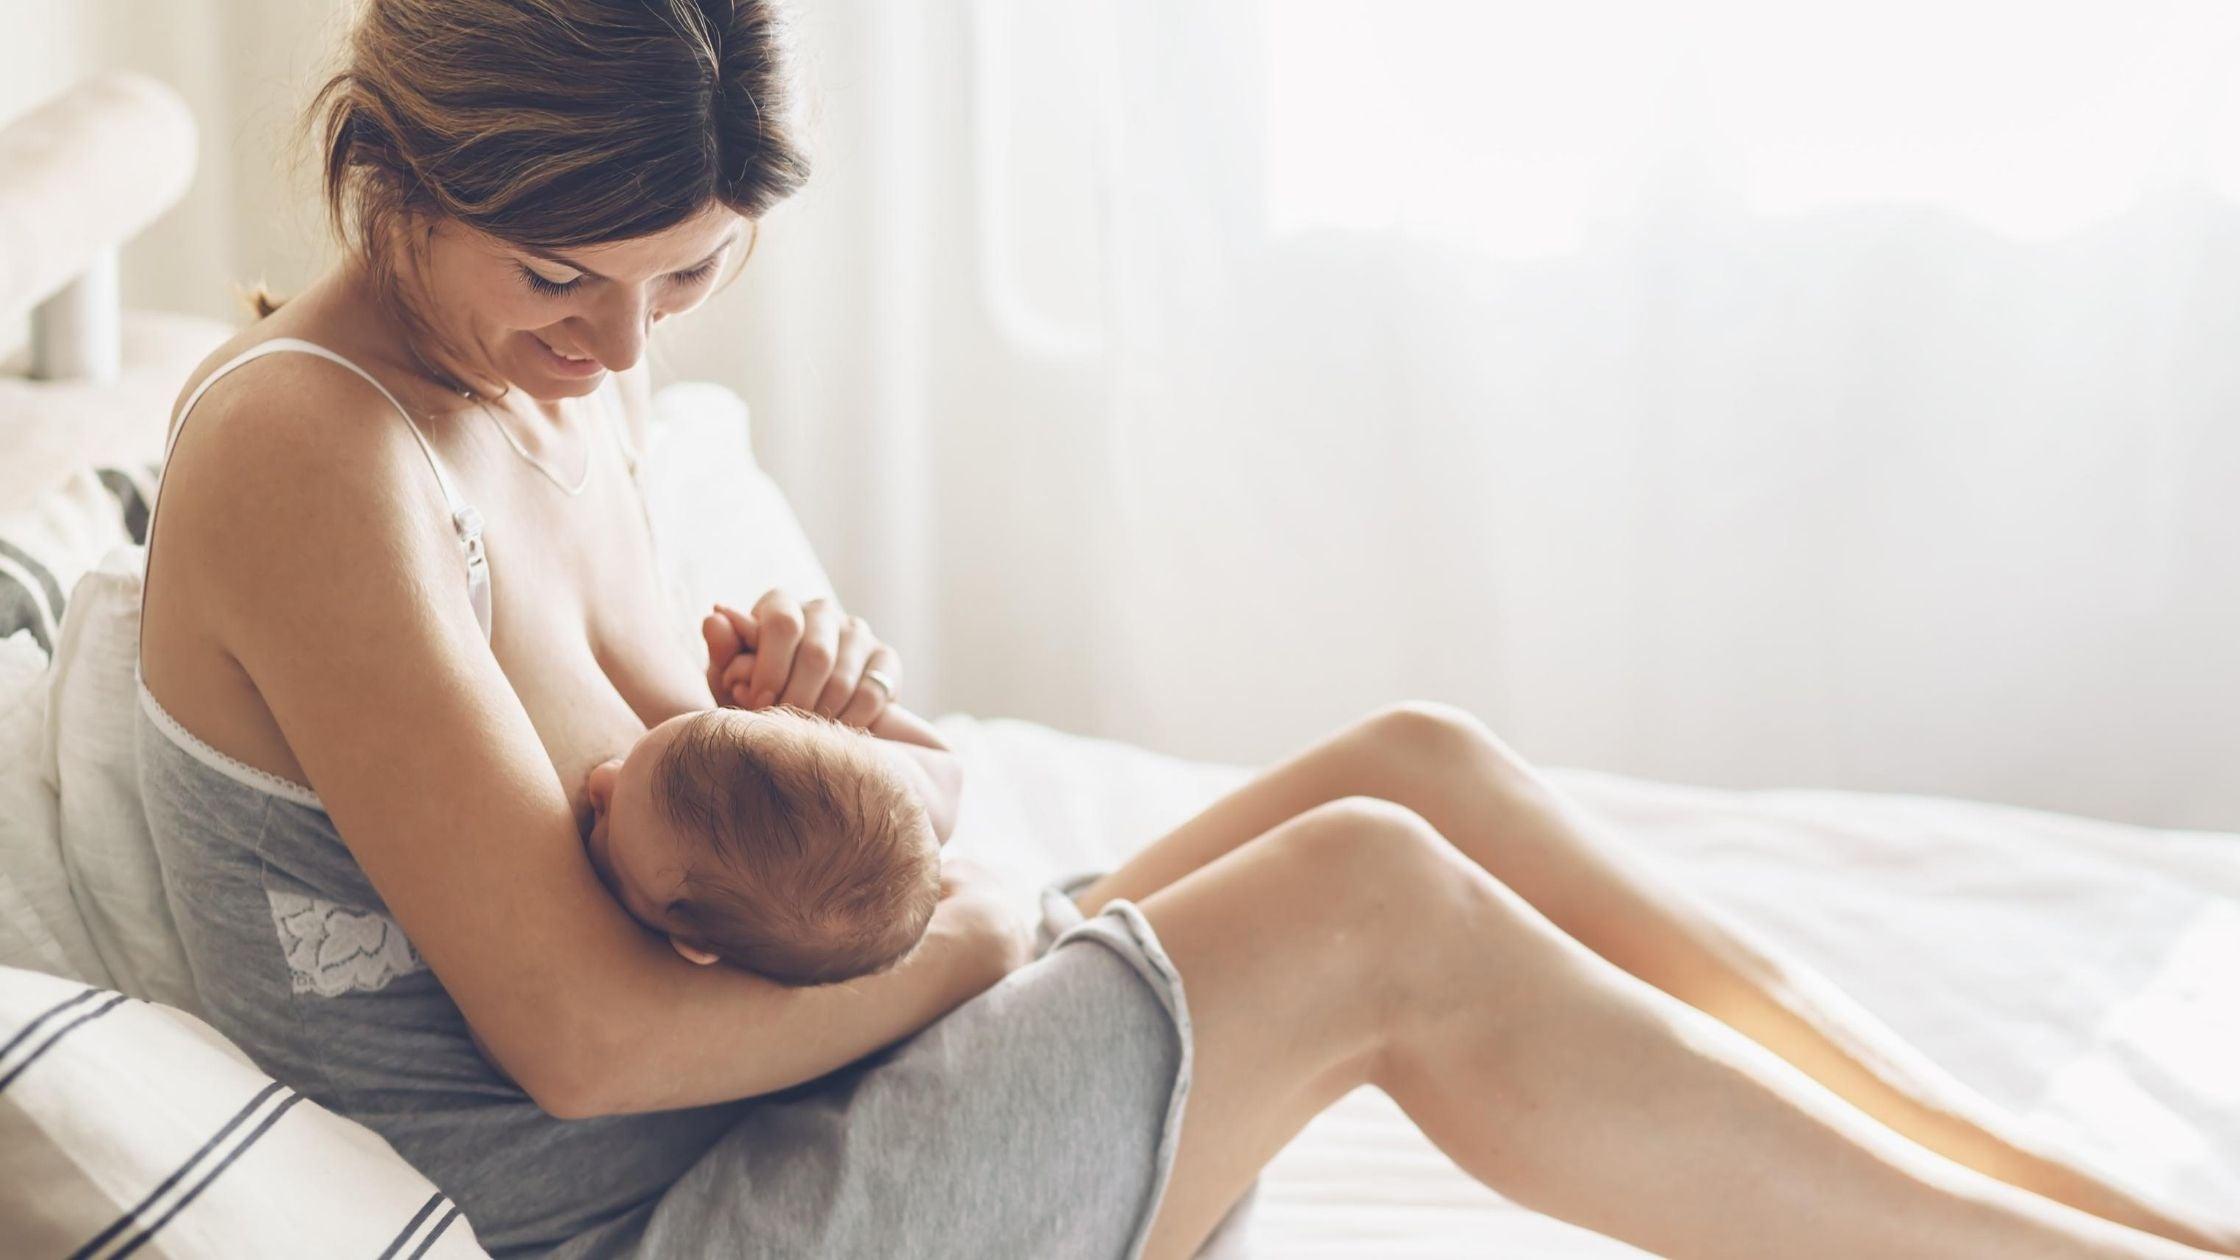 4 Breastfeeding Journey Stories For World Breastfeeding Week - hegen.us